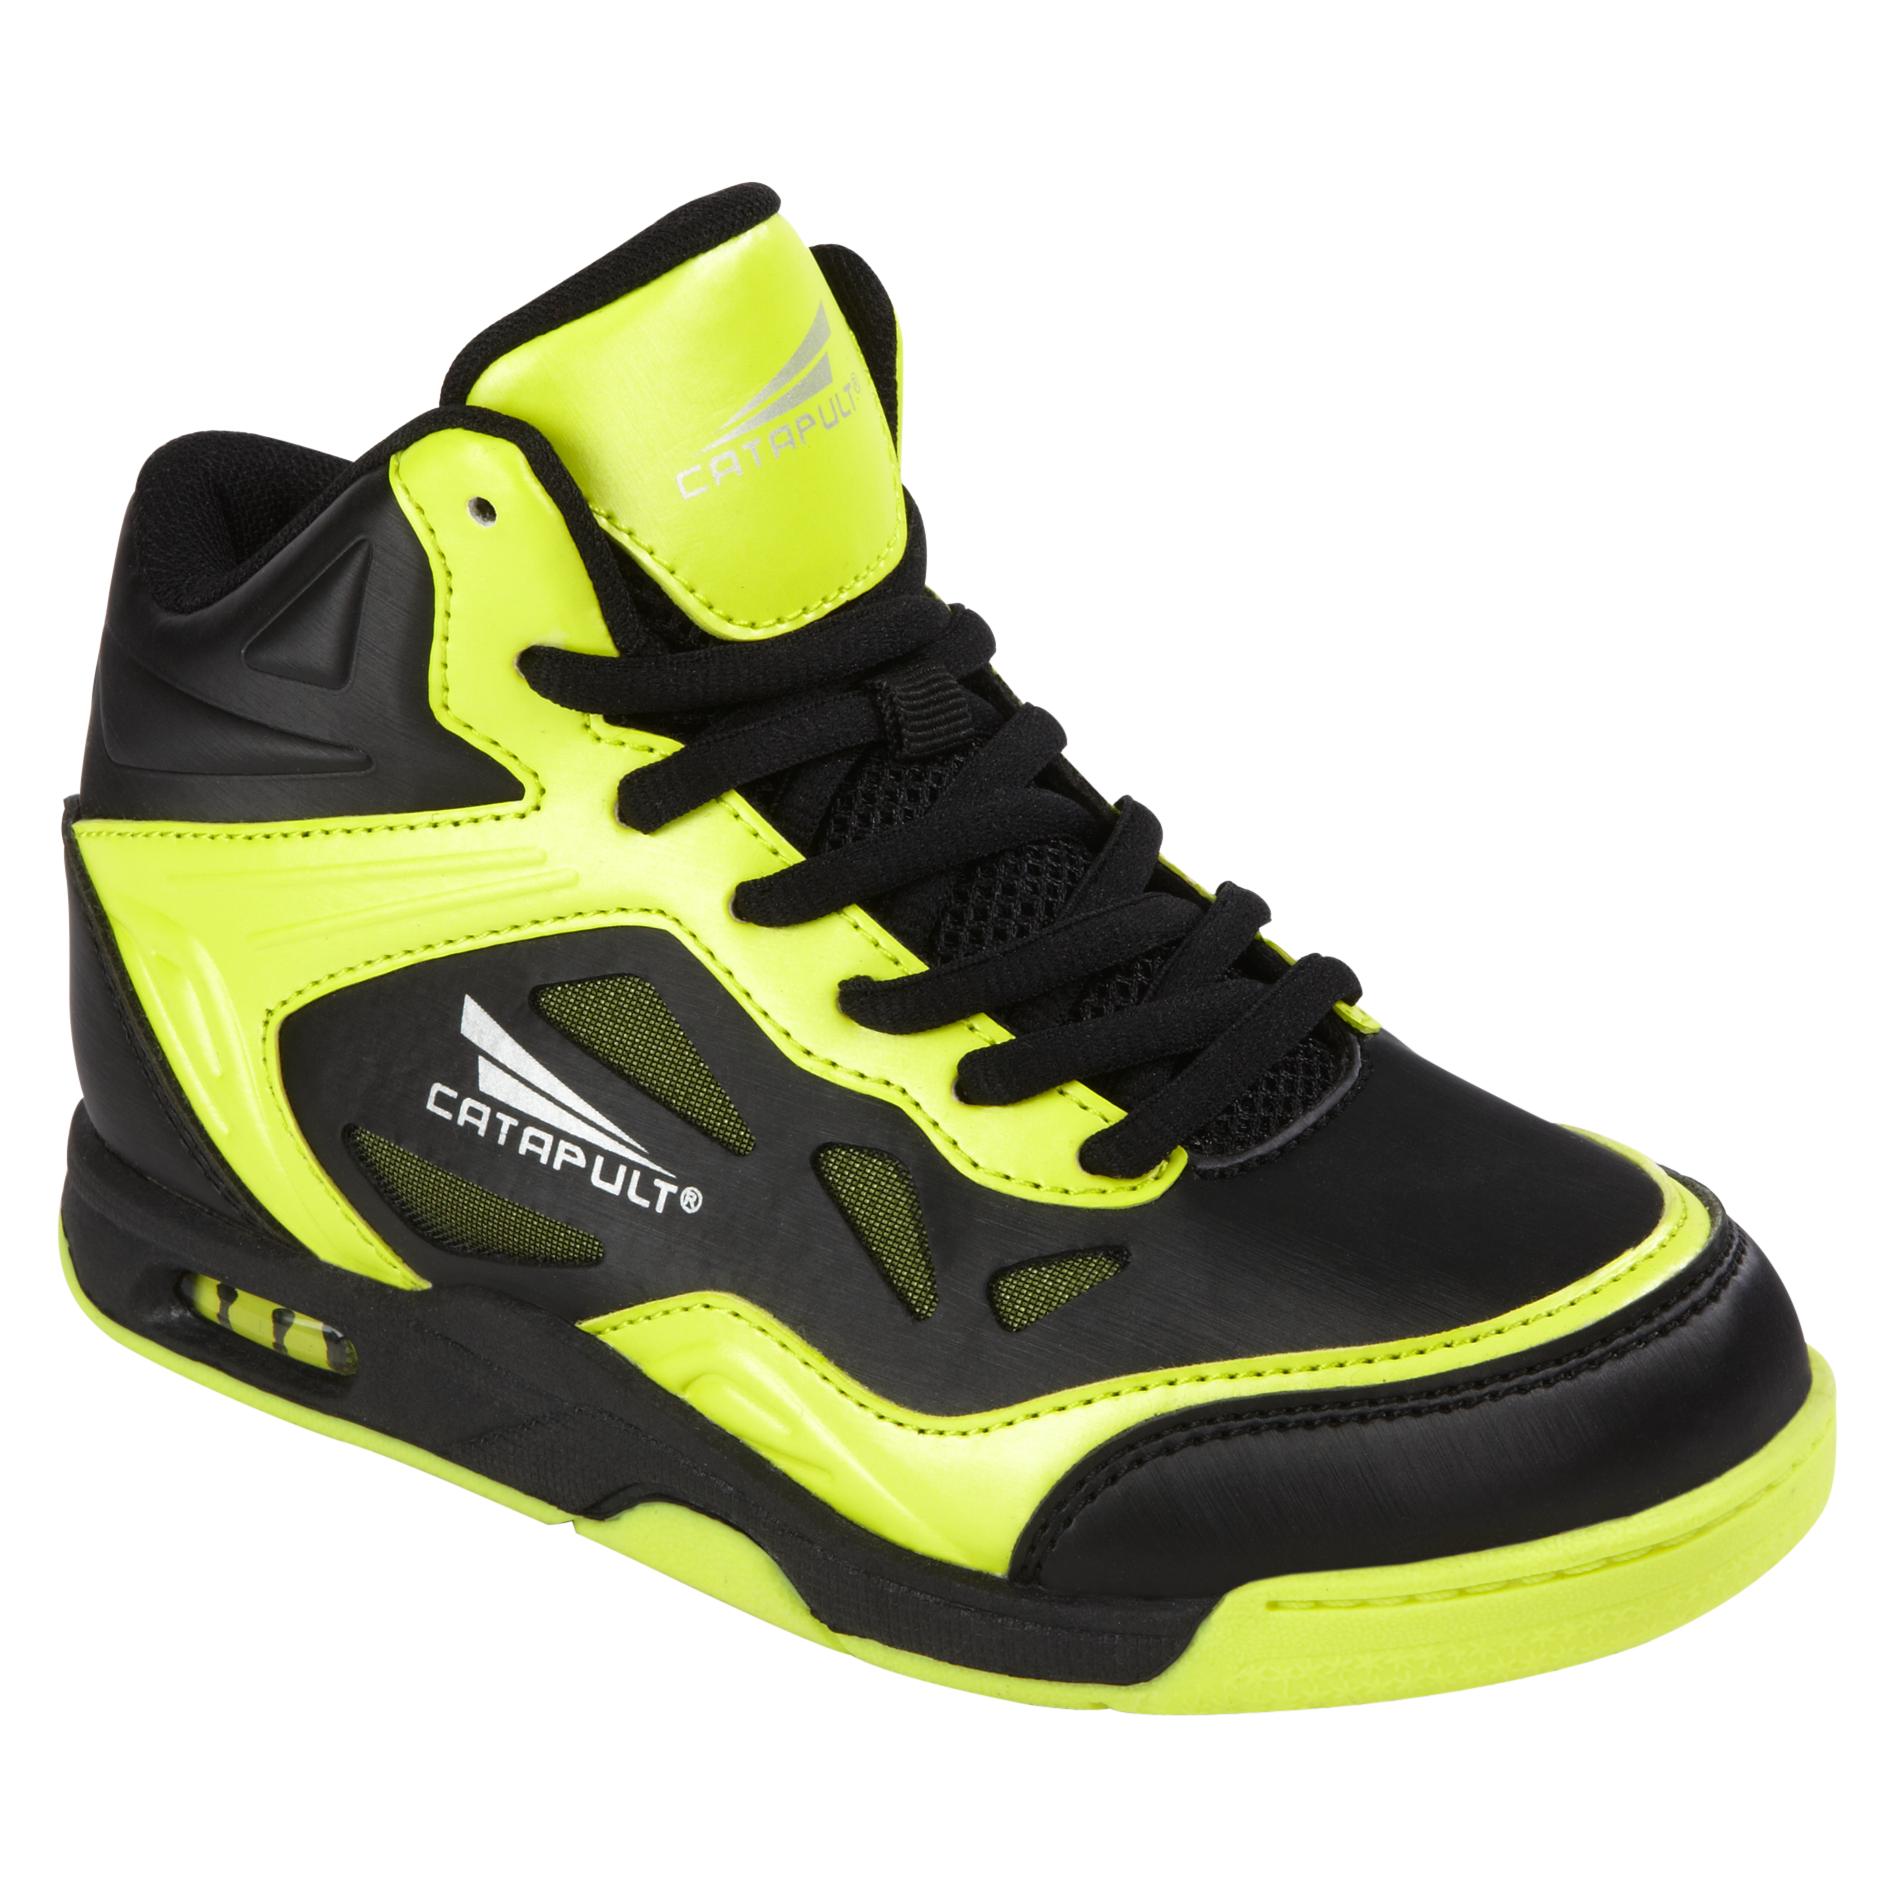 CATAPULT Boy's Sneaker Command - Black/Yellow